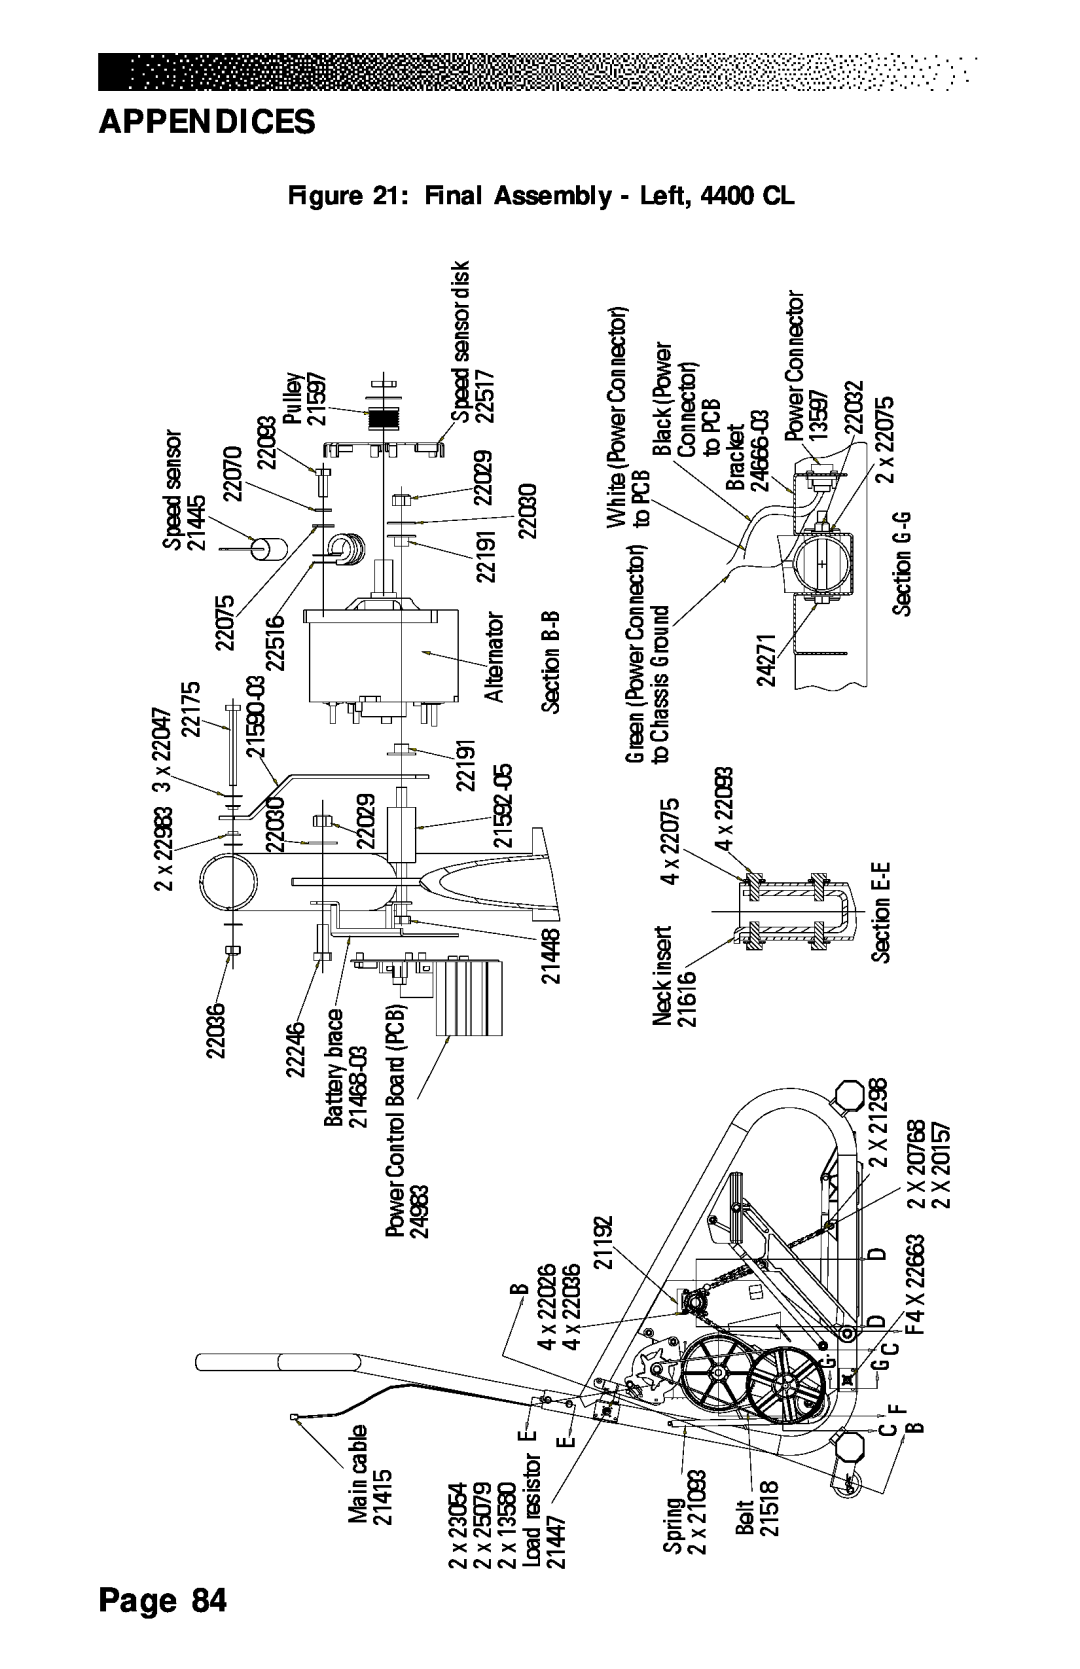 Stairmaster 4600 PT/CL, 4200 PT, 4400 PT/CL manual Final Assembly - Left, 4400 CL, Appendices, Page 